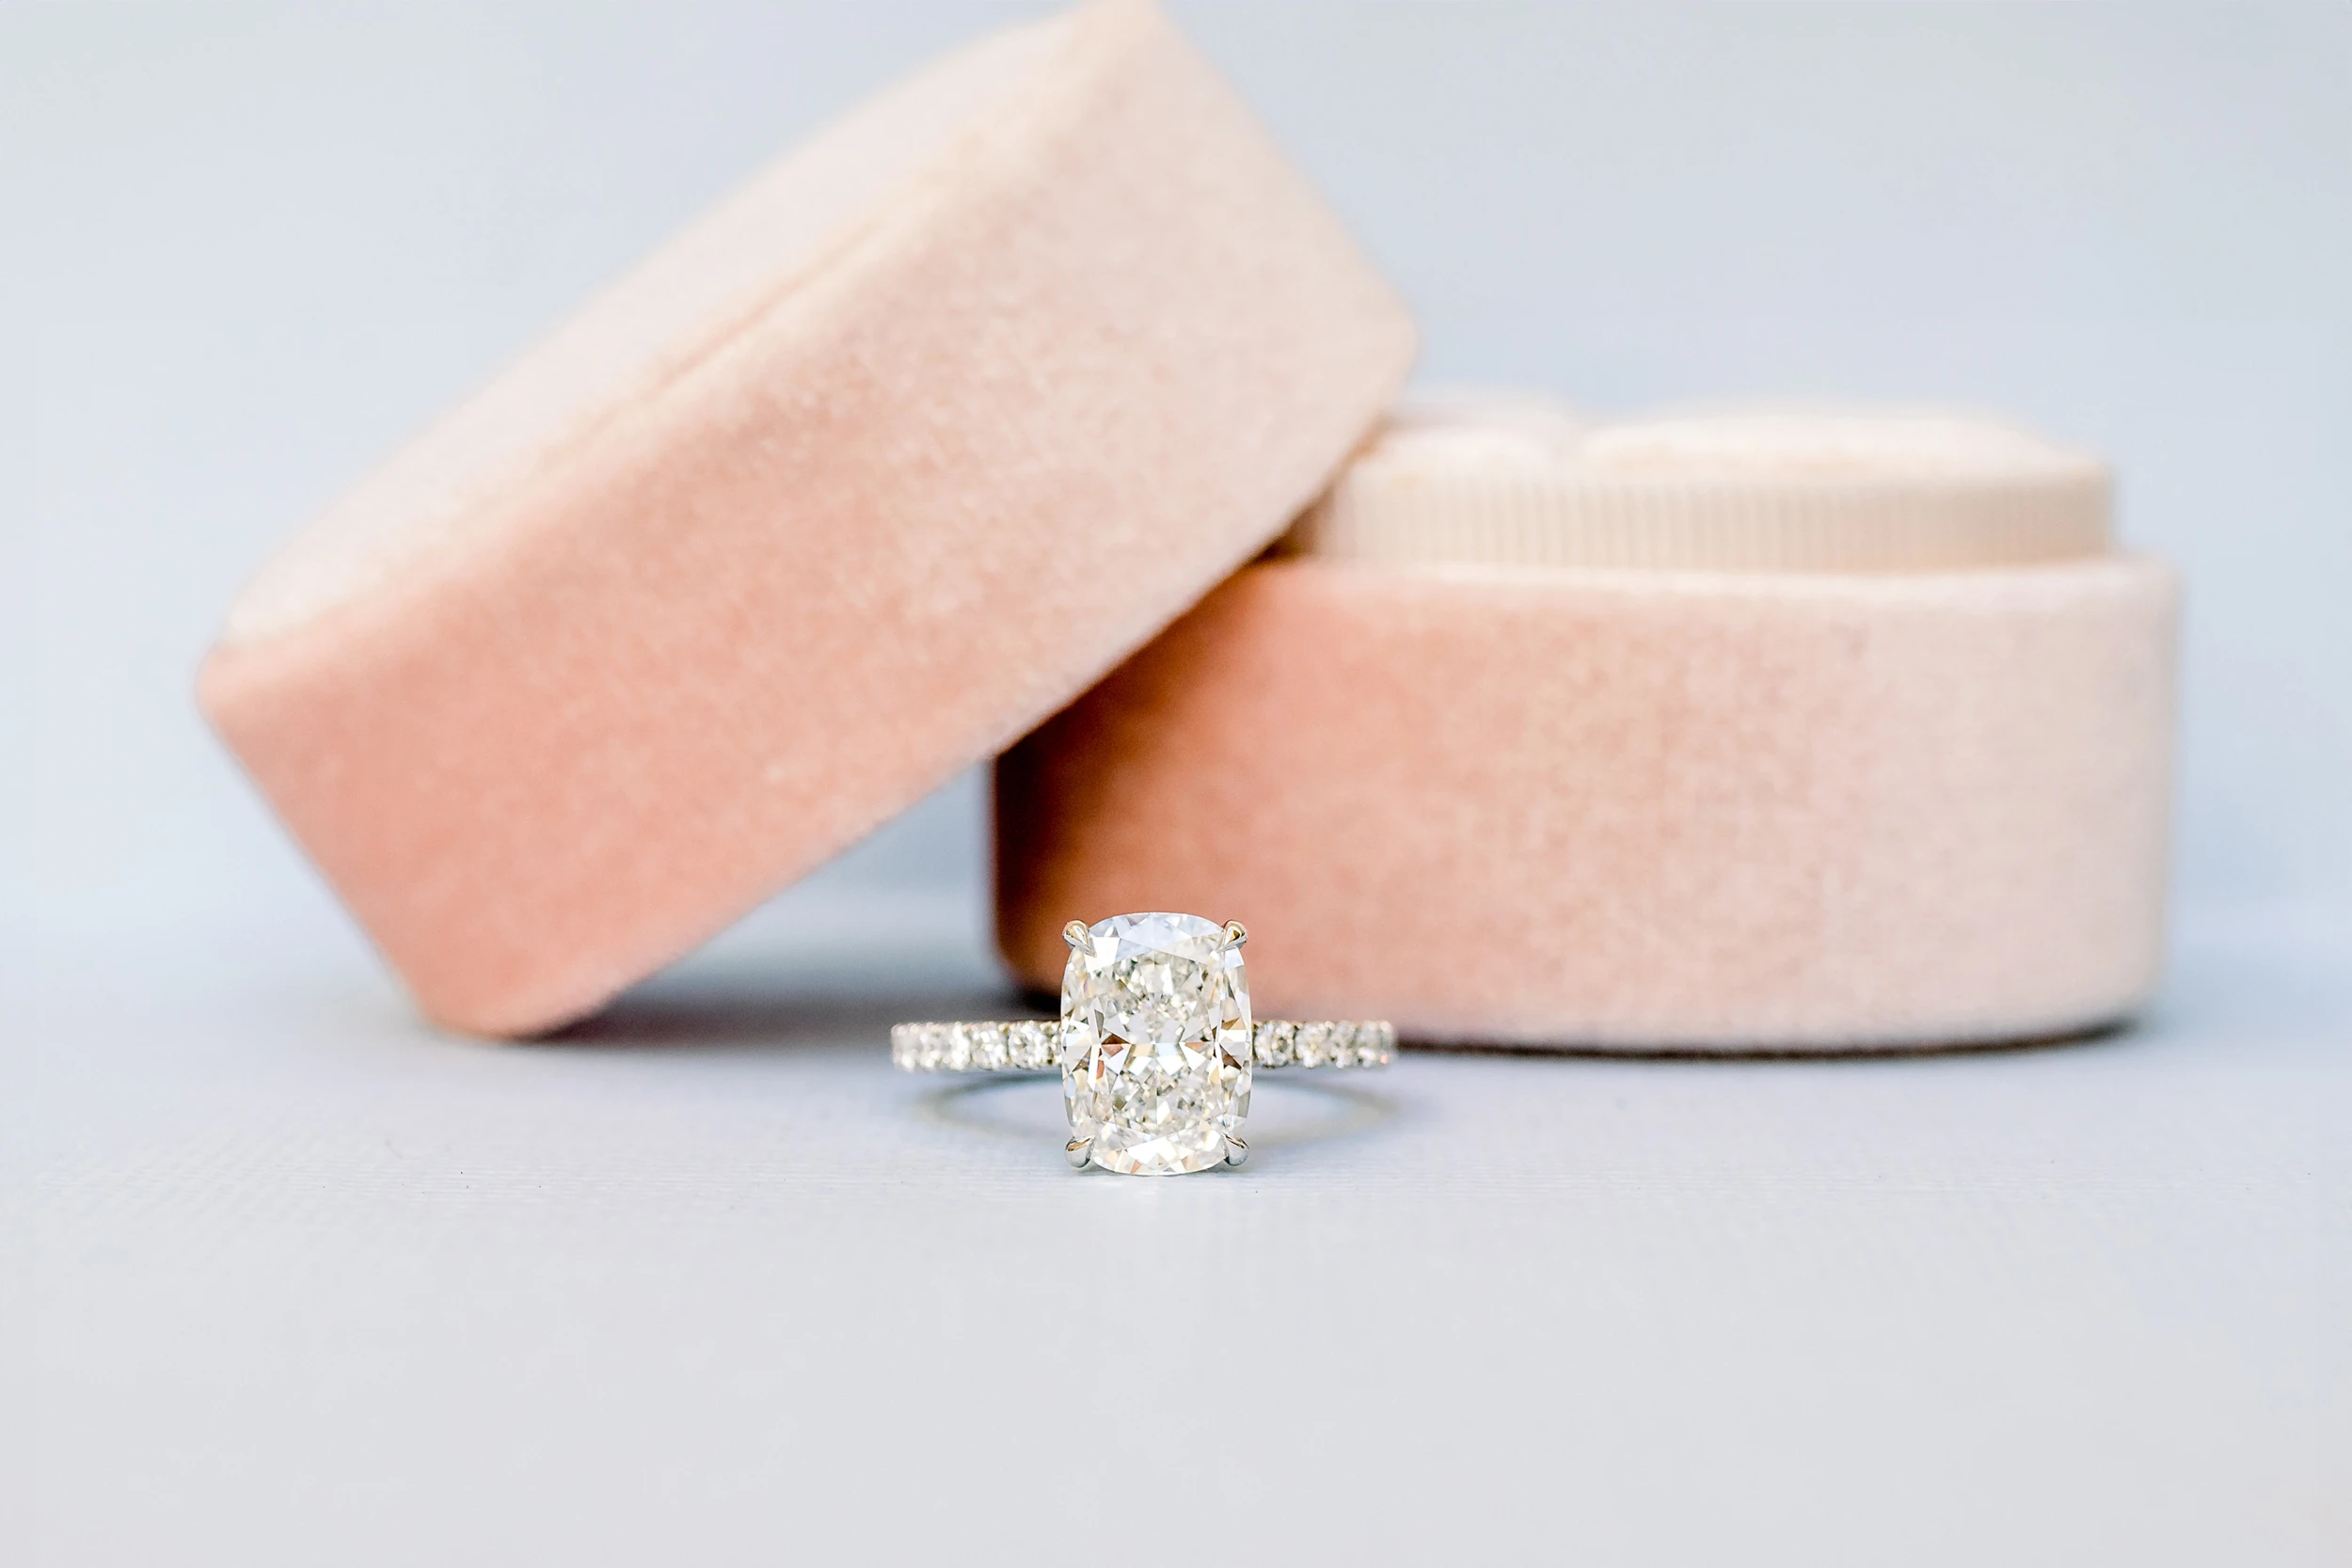 3.0 Carat Man Made Diamonds set in Platinum Cushion Petite Four Prong Pavé Diamond Engagement Ring (Main View)